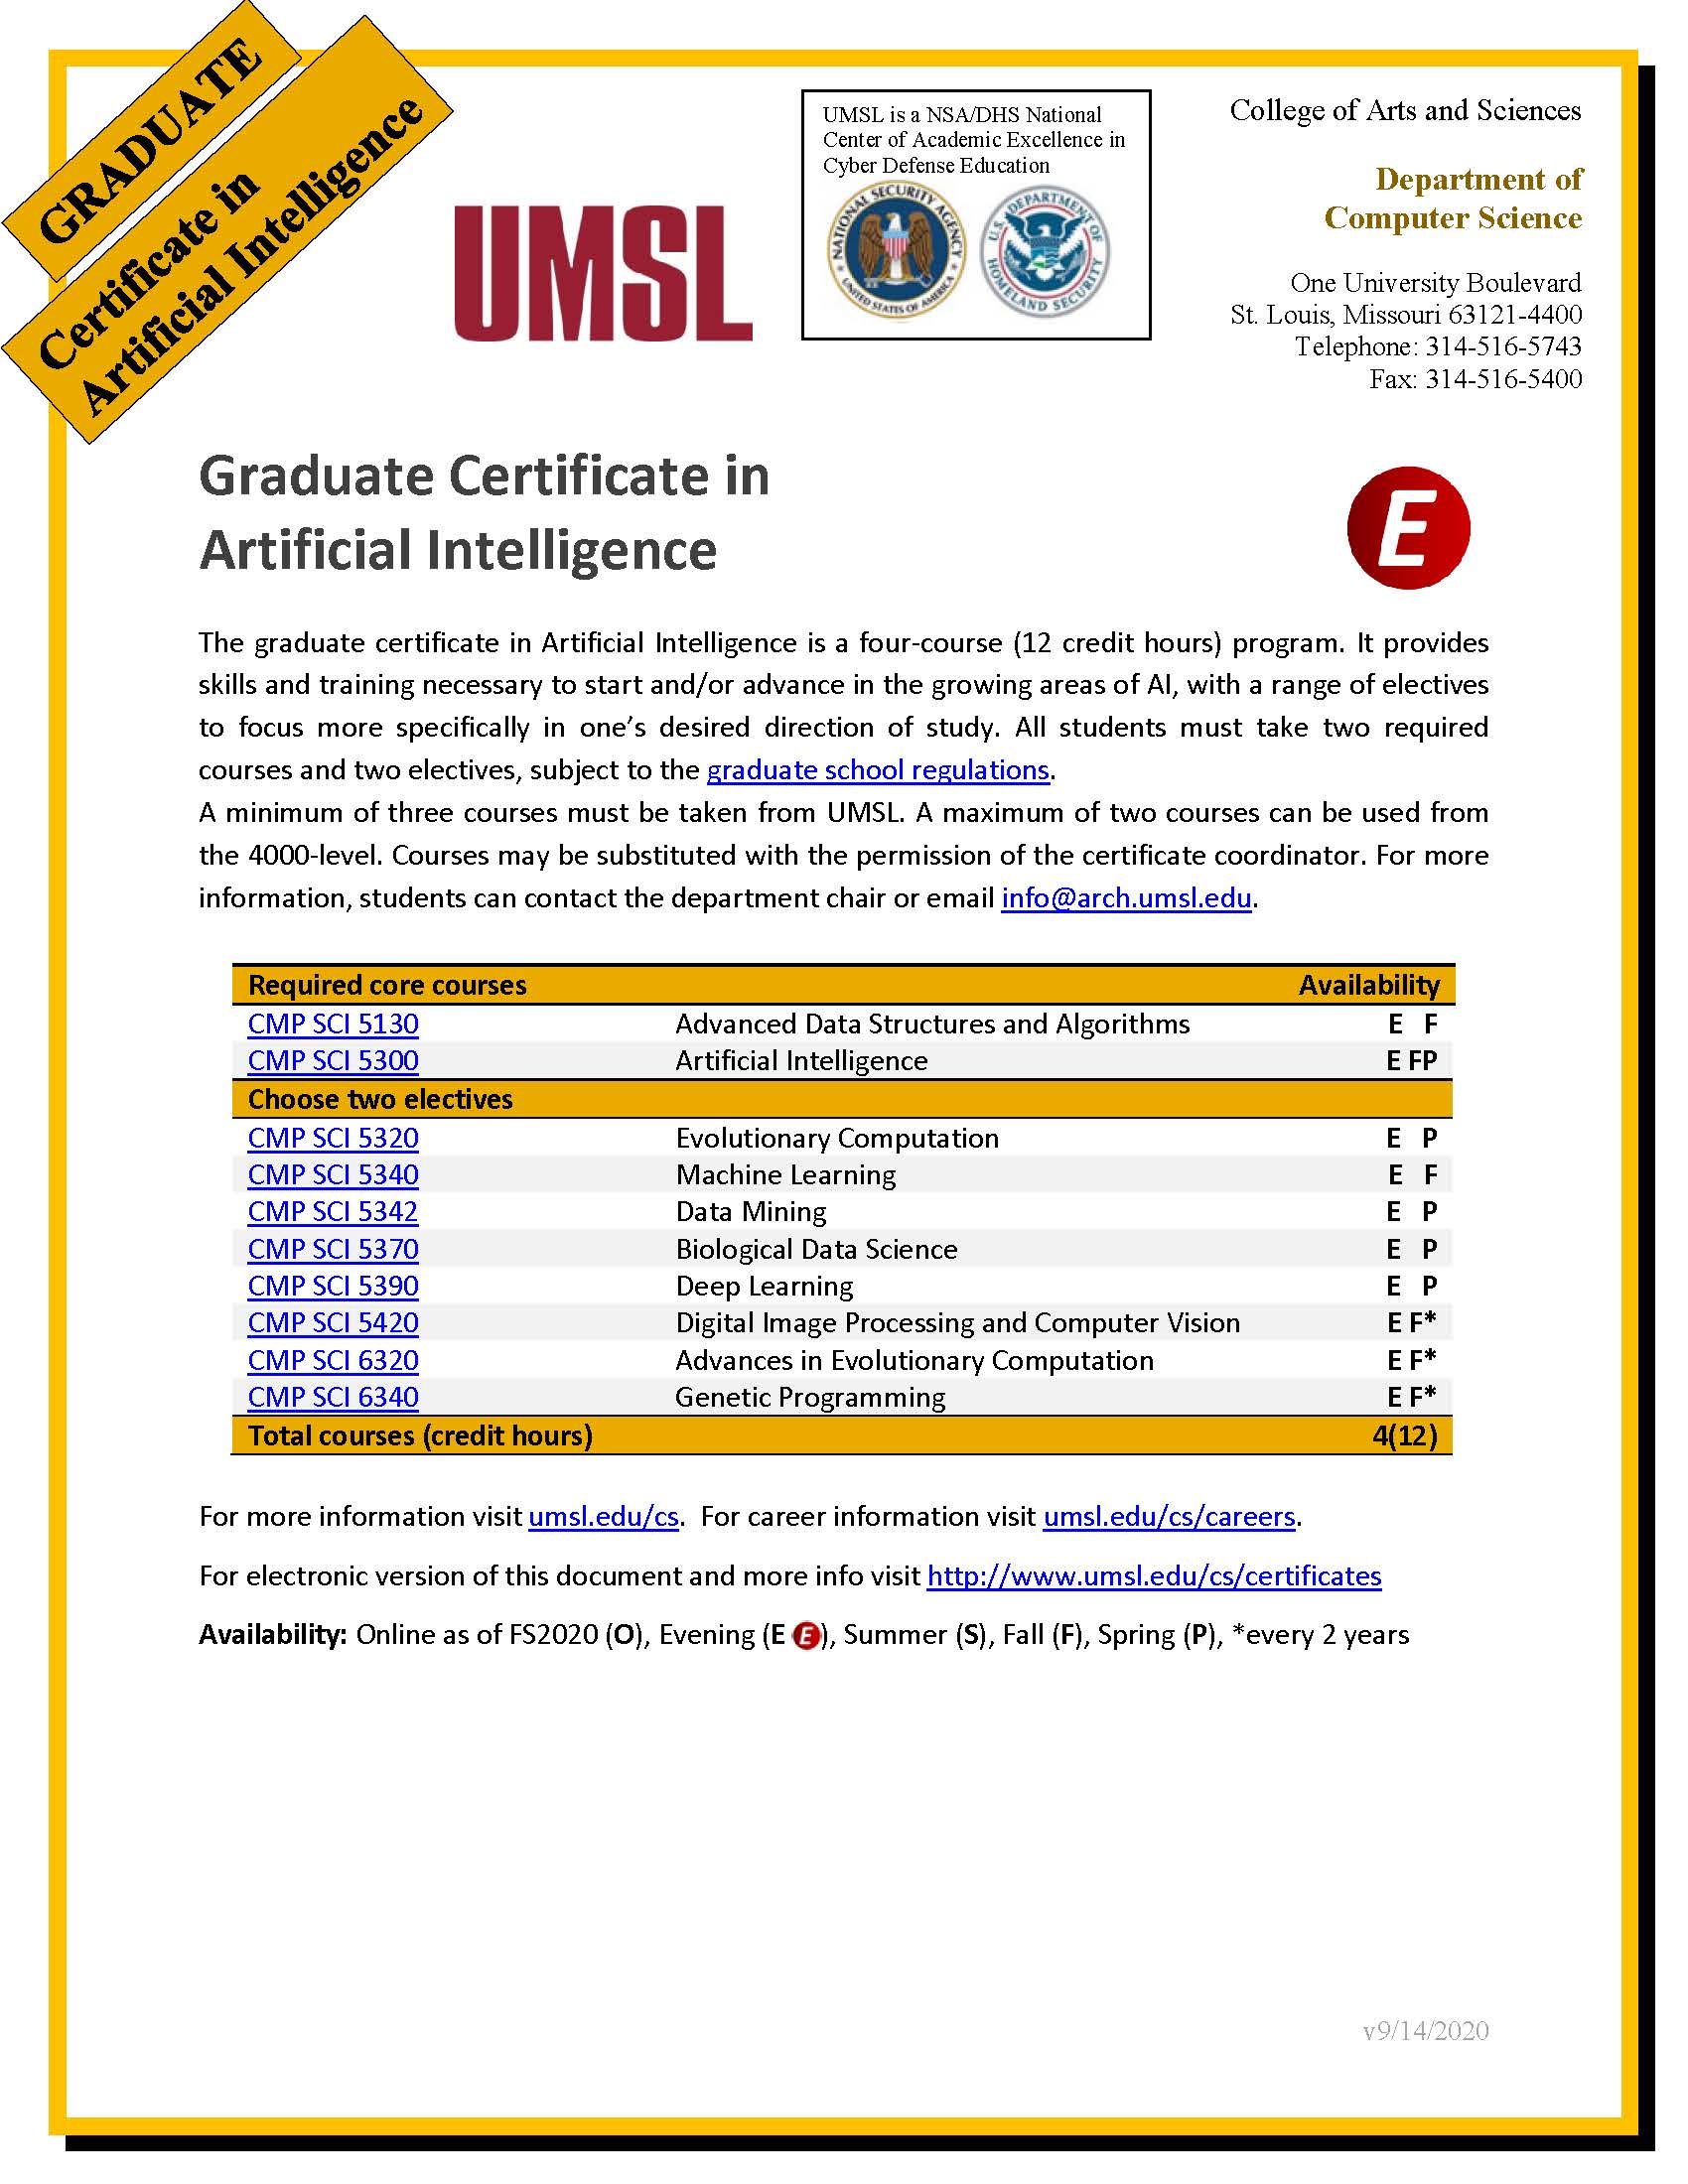 CertificateGraduate_ArtificialIntelligence_Flyer.jpg